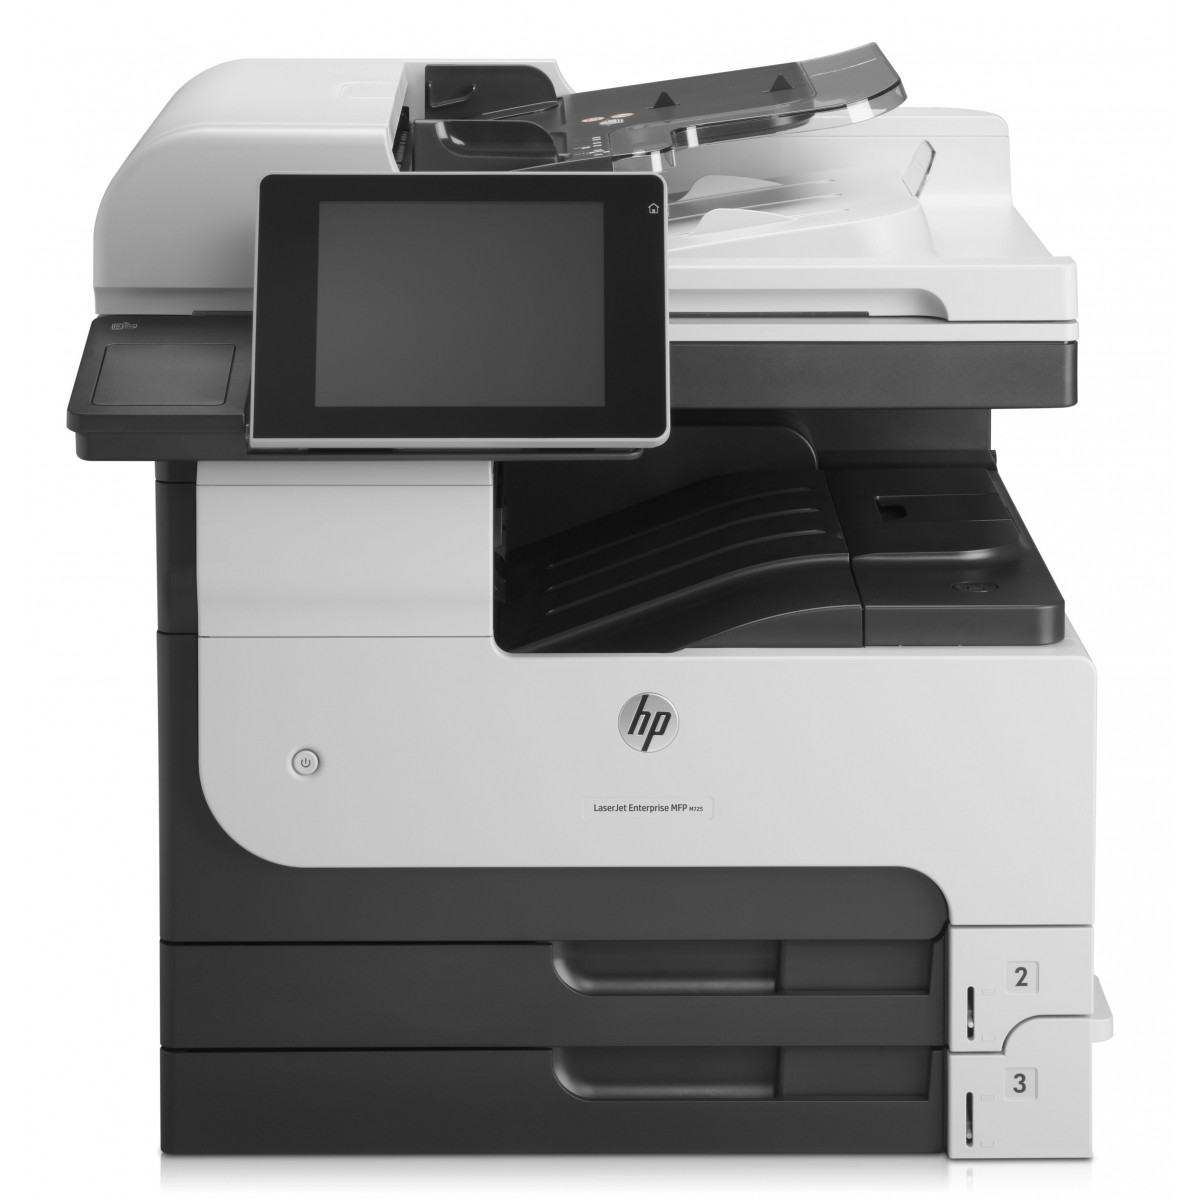 HP LaserJet Enterprise MFP M725dn Laser/Led Multifunction Printer - b/w - 41 ppm - USB 2.0 RJ-45